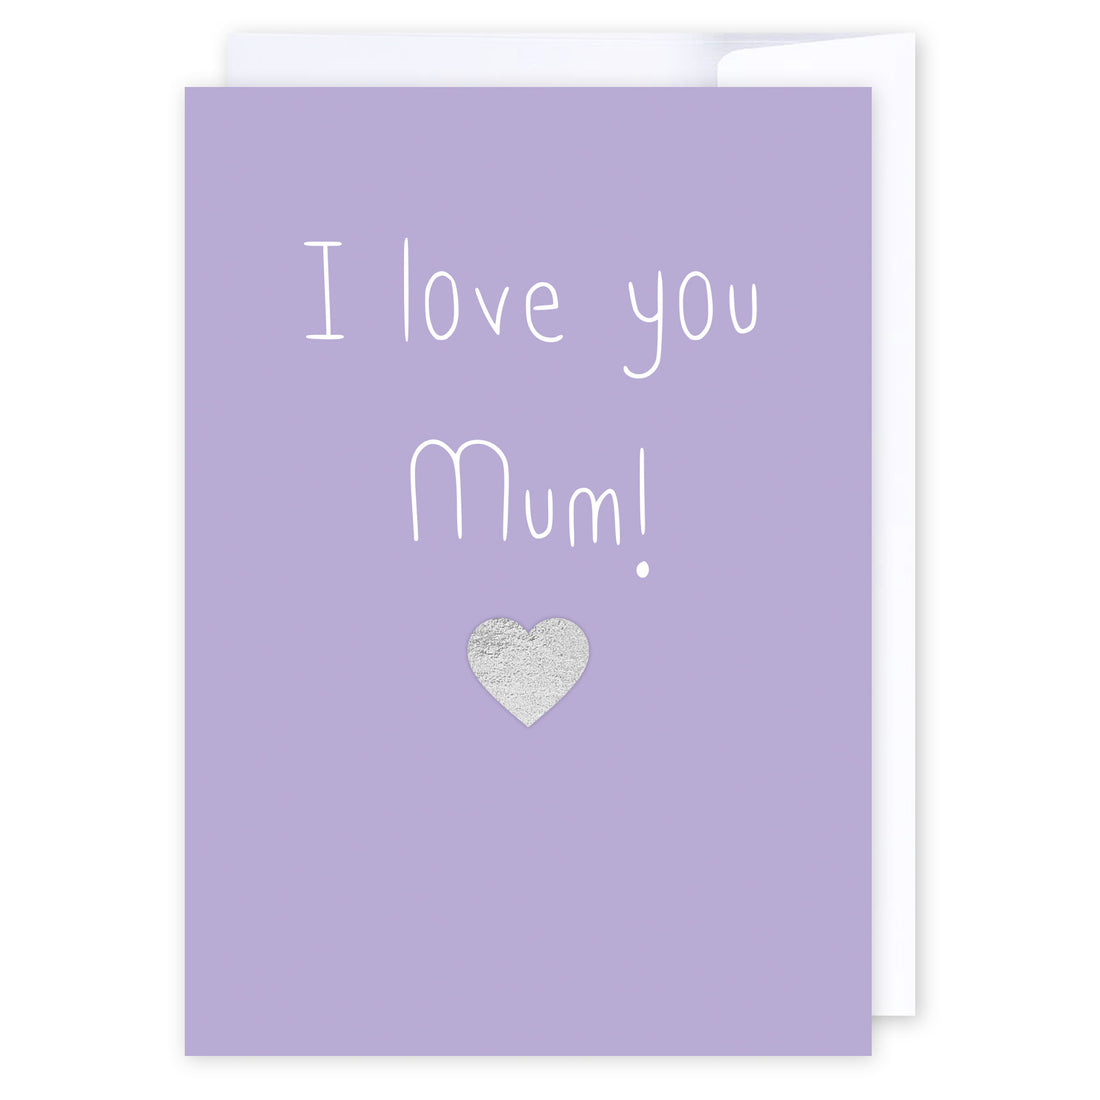 I love you mum purple